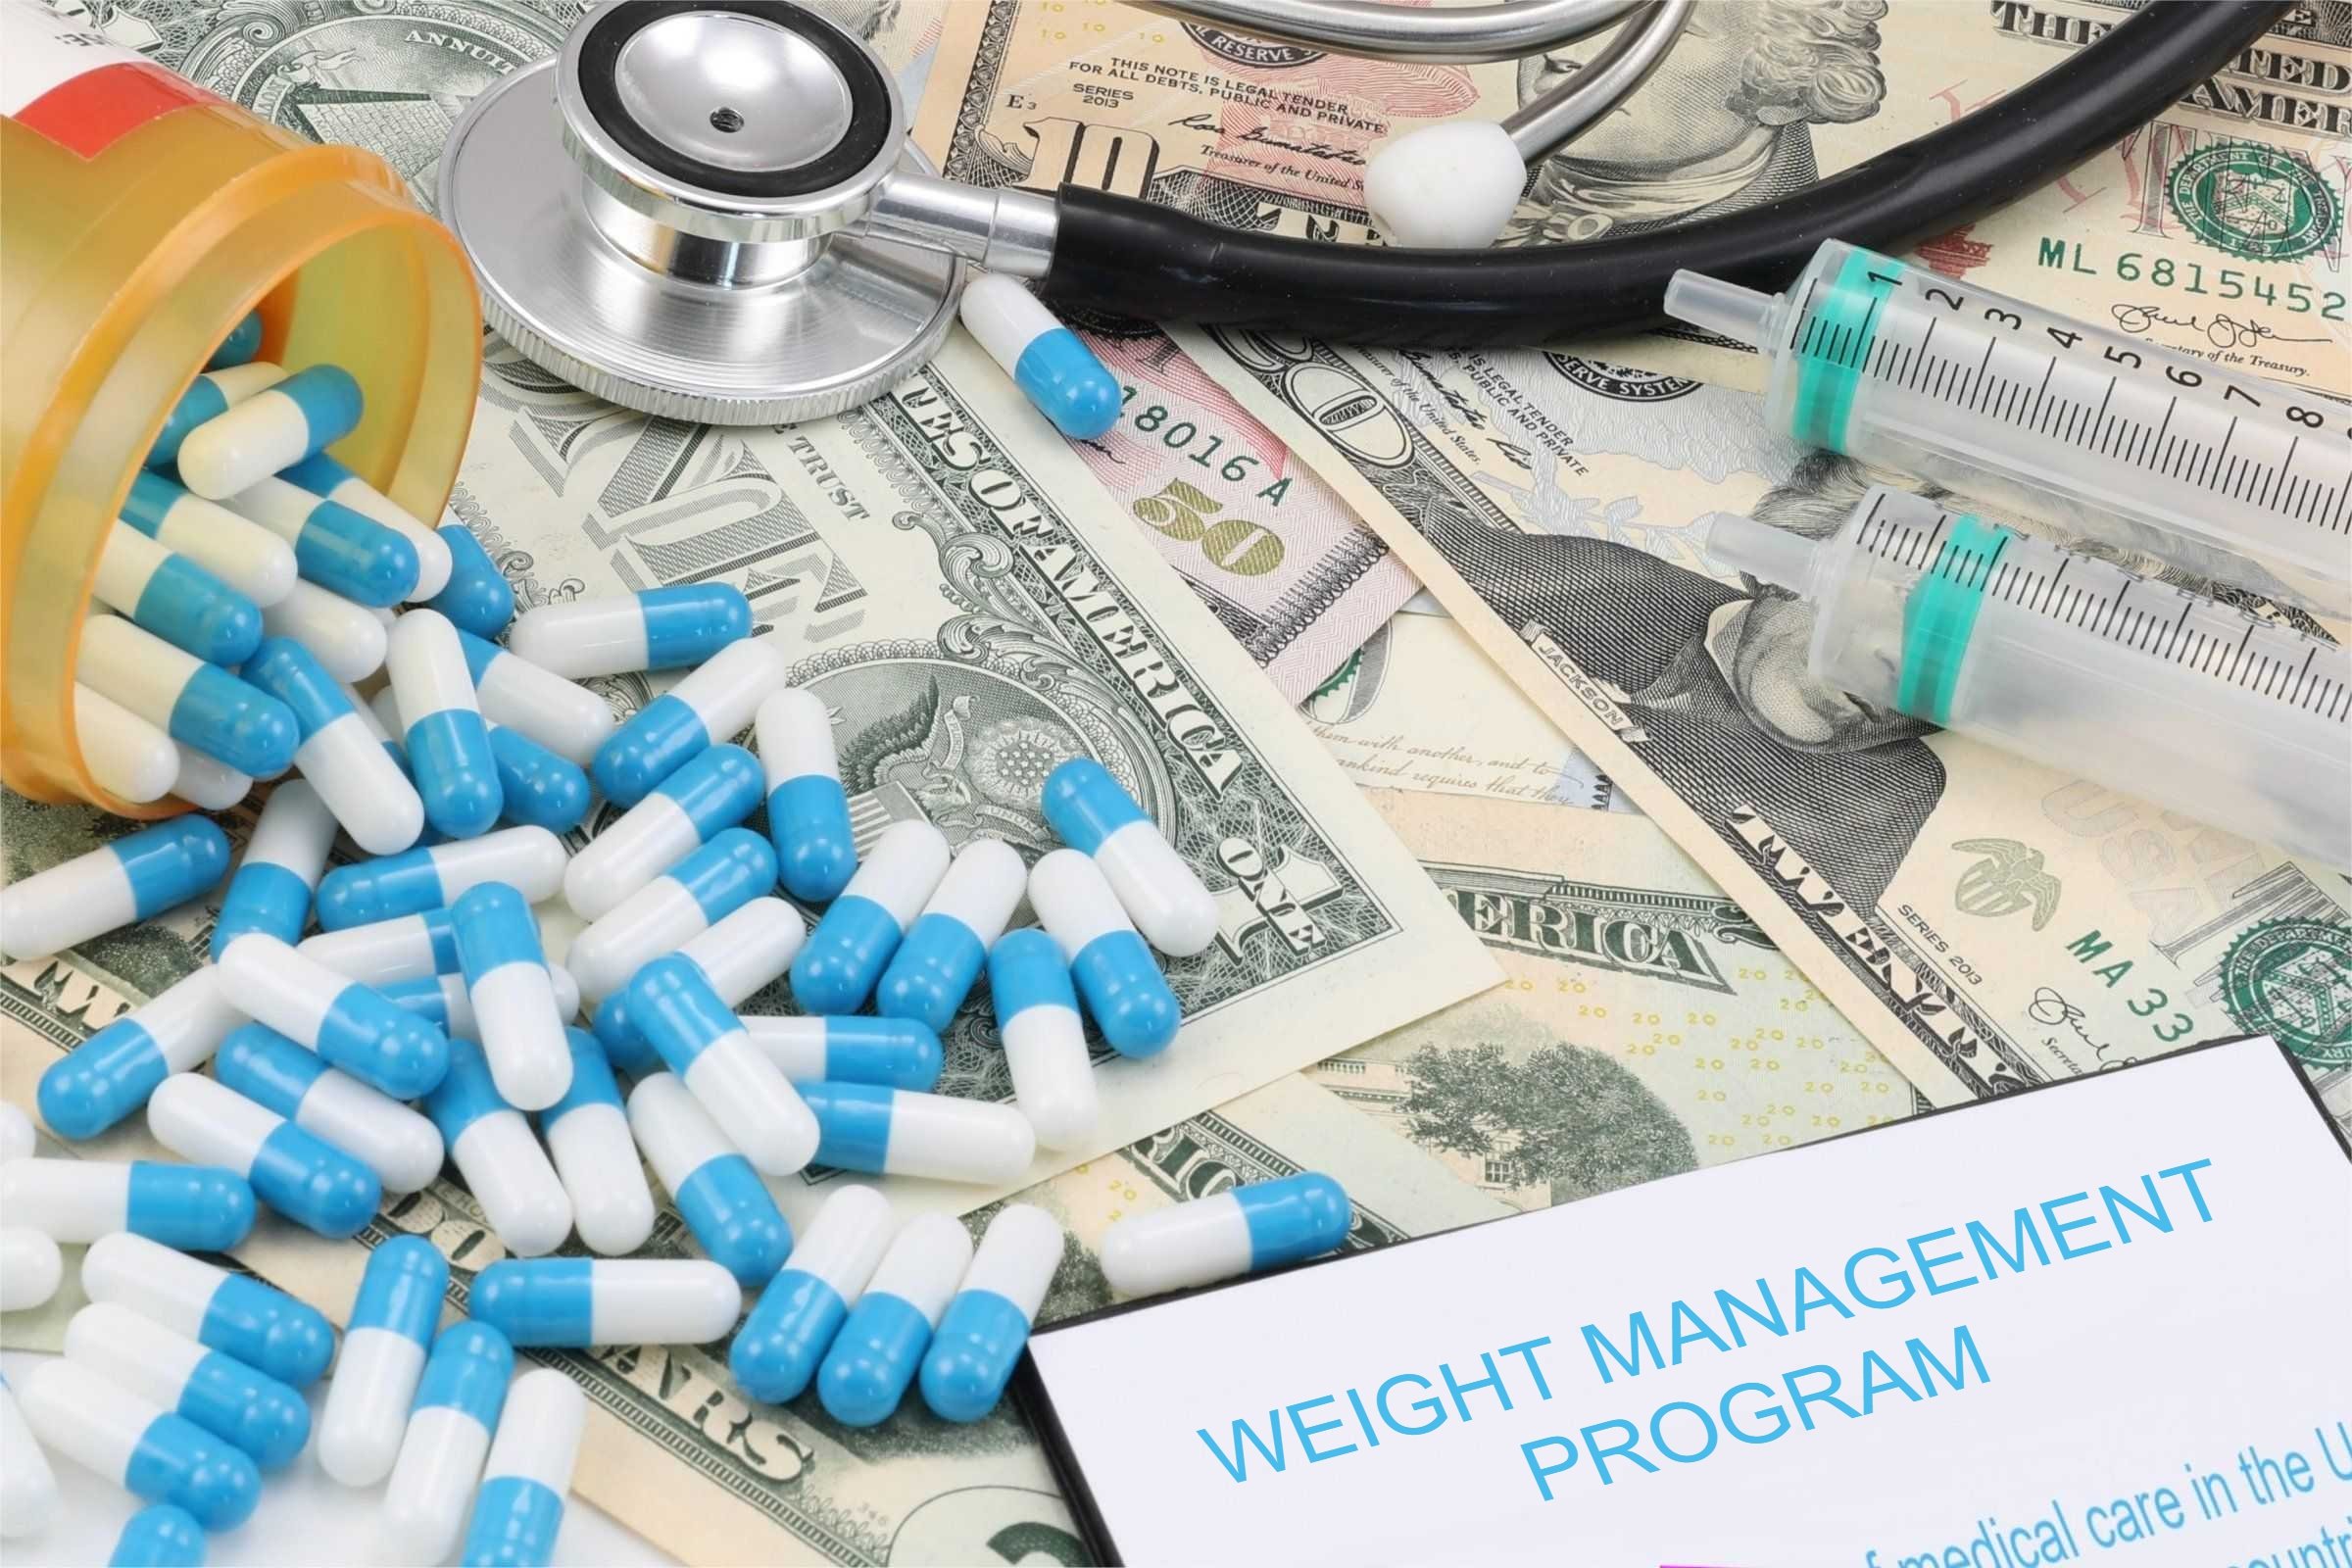 weight management program